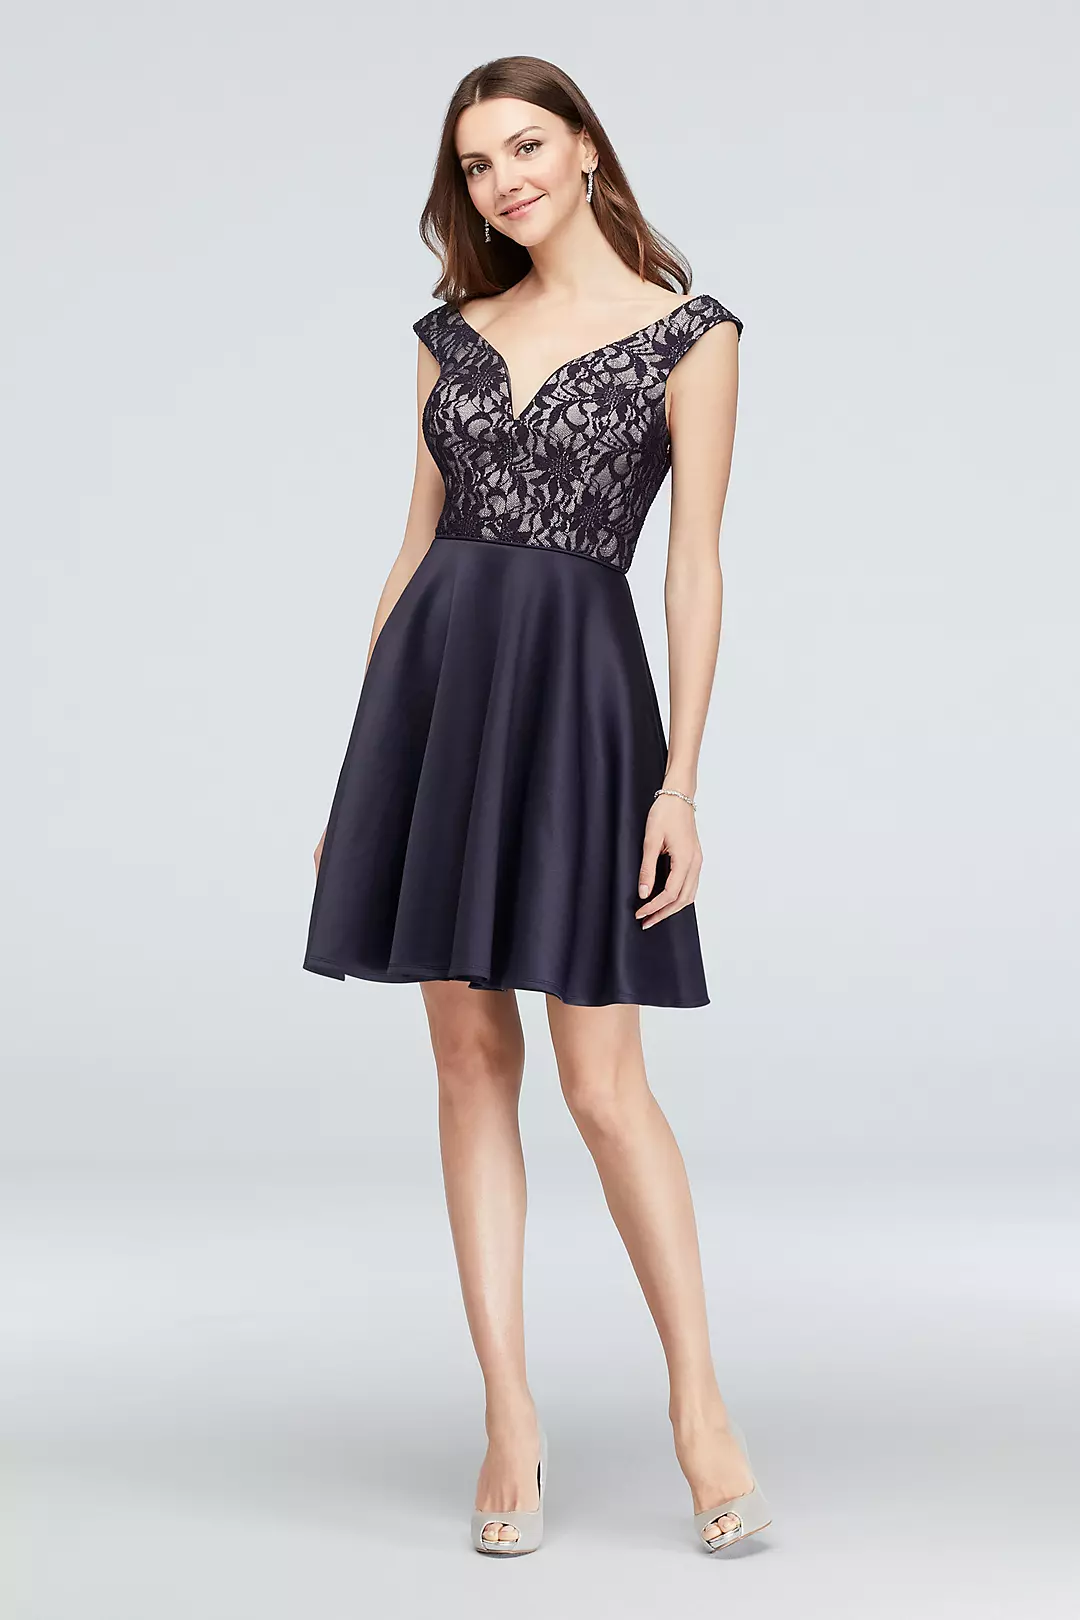 V-Neck Bonded Lace Fit-and-Flare Short Dress Image